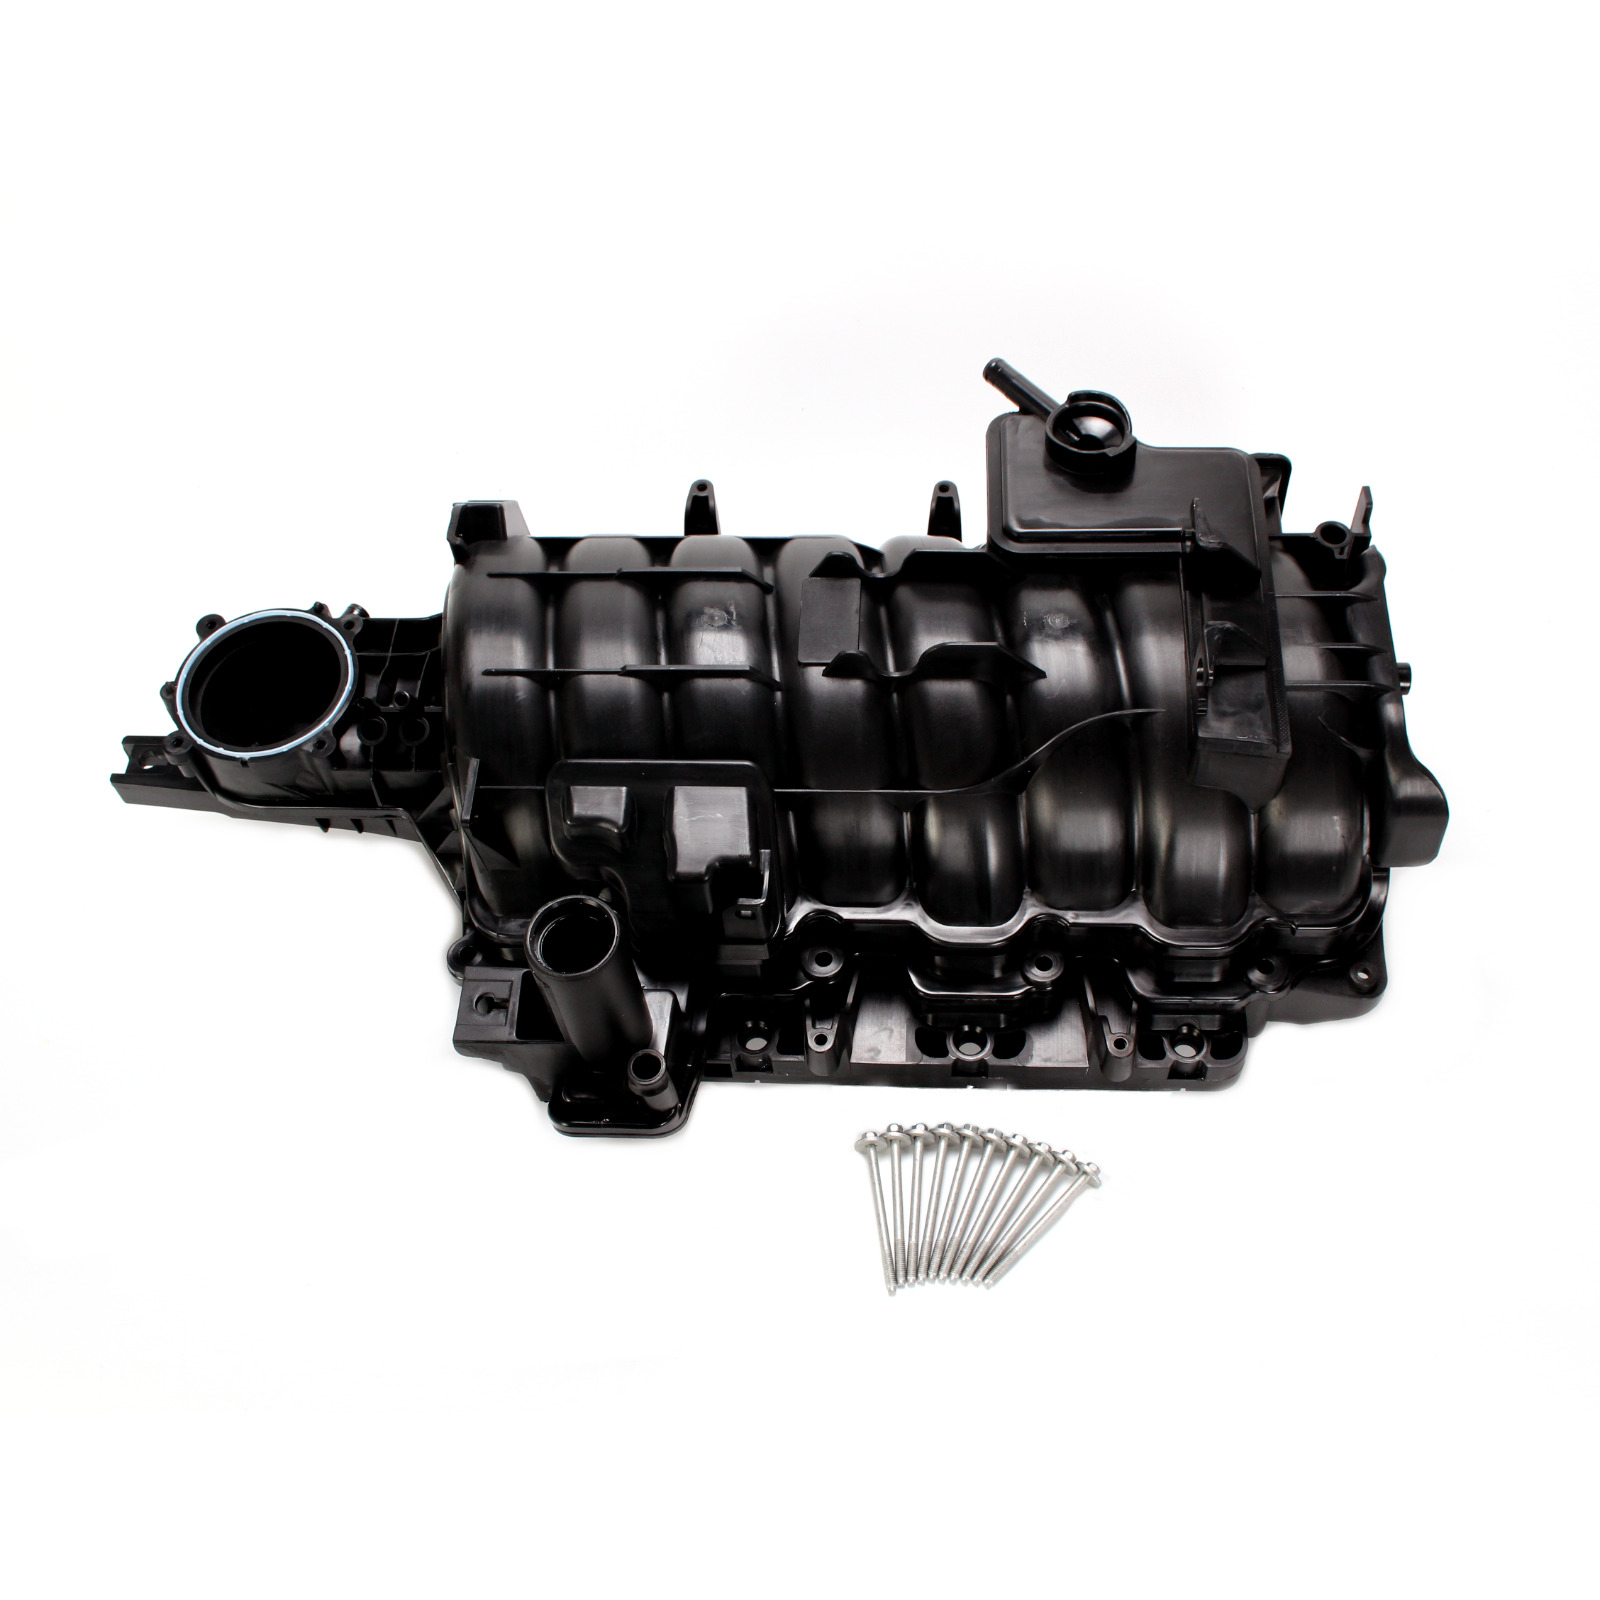 Air Intake Manifold For Dodge Ram 1500 2500 3500 Chrysler Aspen 5.7L V8 GAS CNG